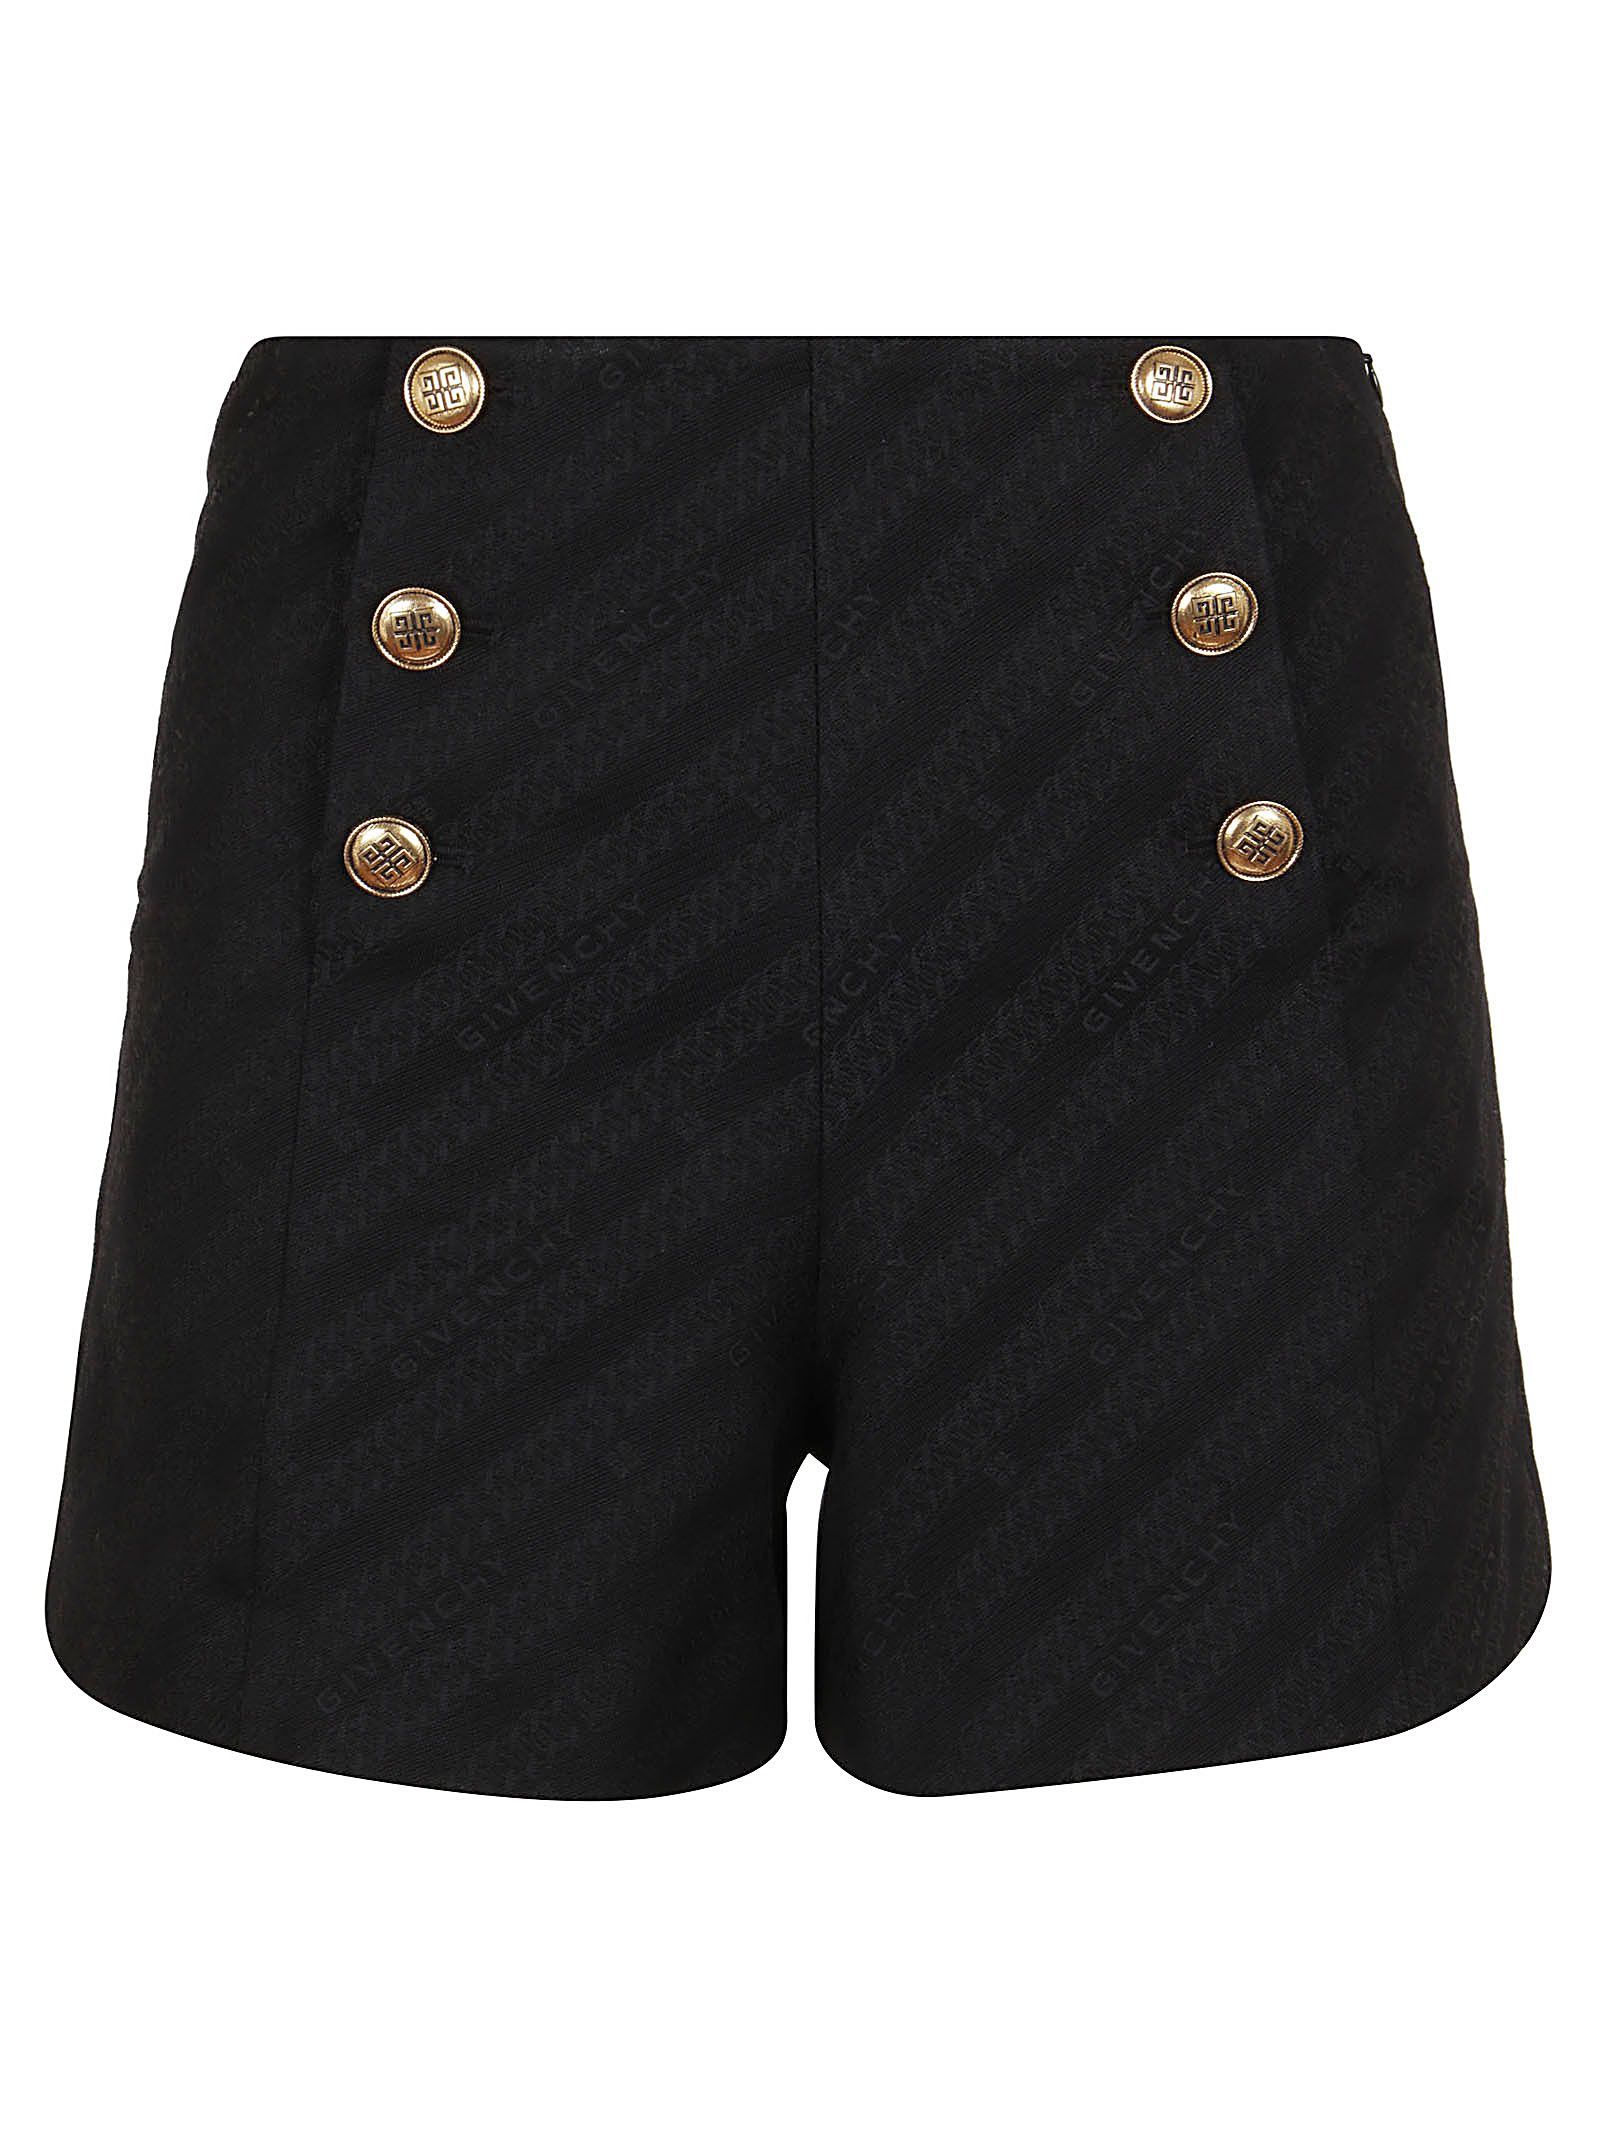 Givenchy Women's BW50Ky12Yf001 Black Viscose Shorts